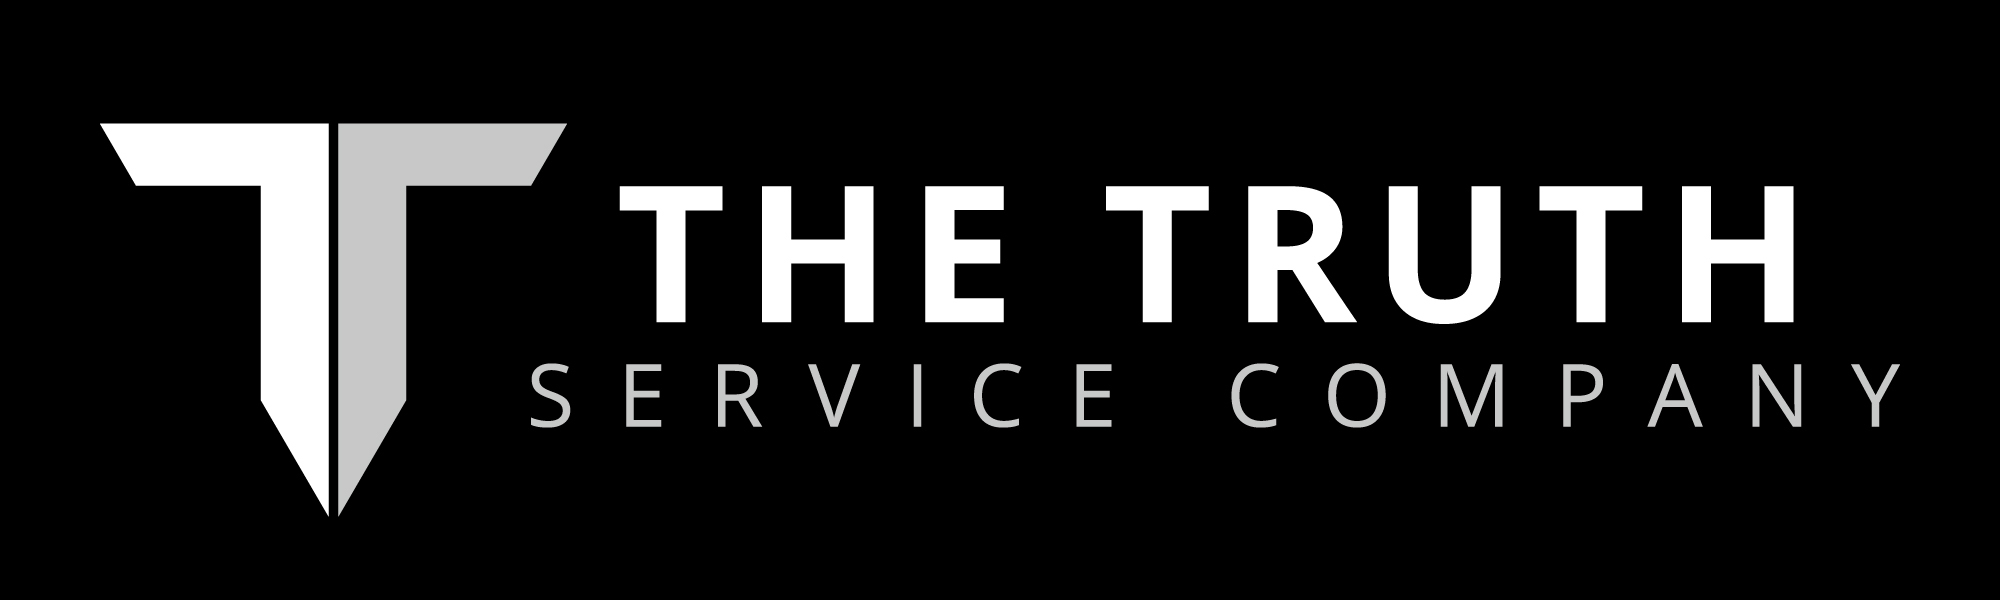 The Truth Service Company